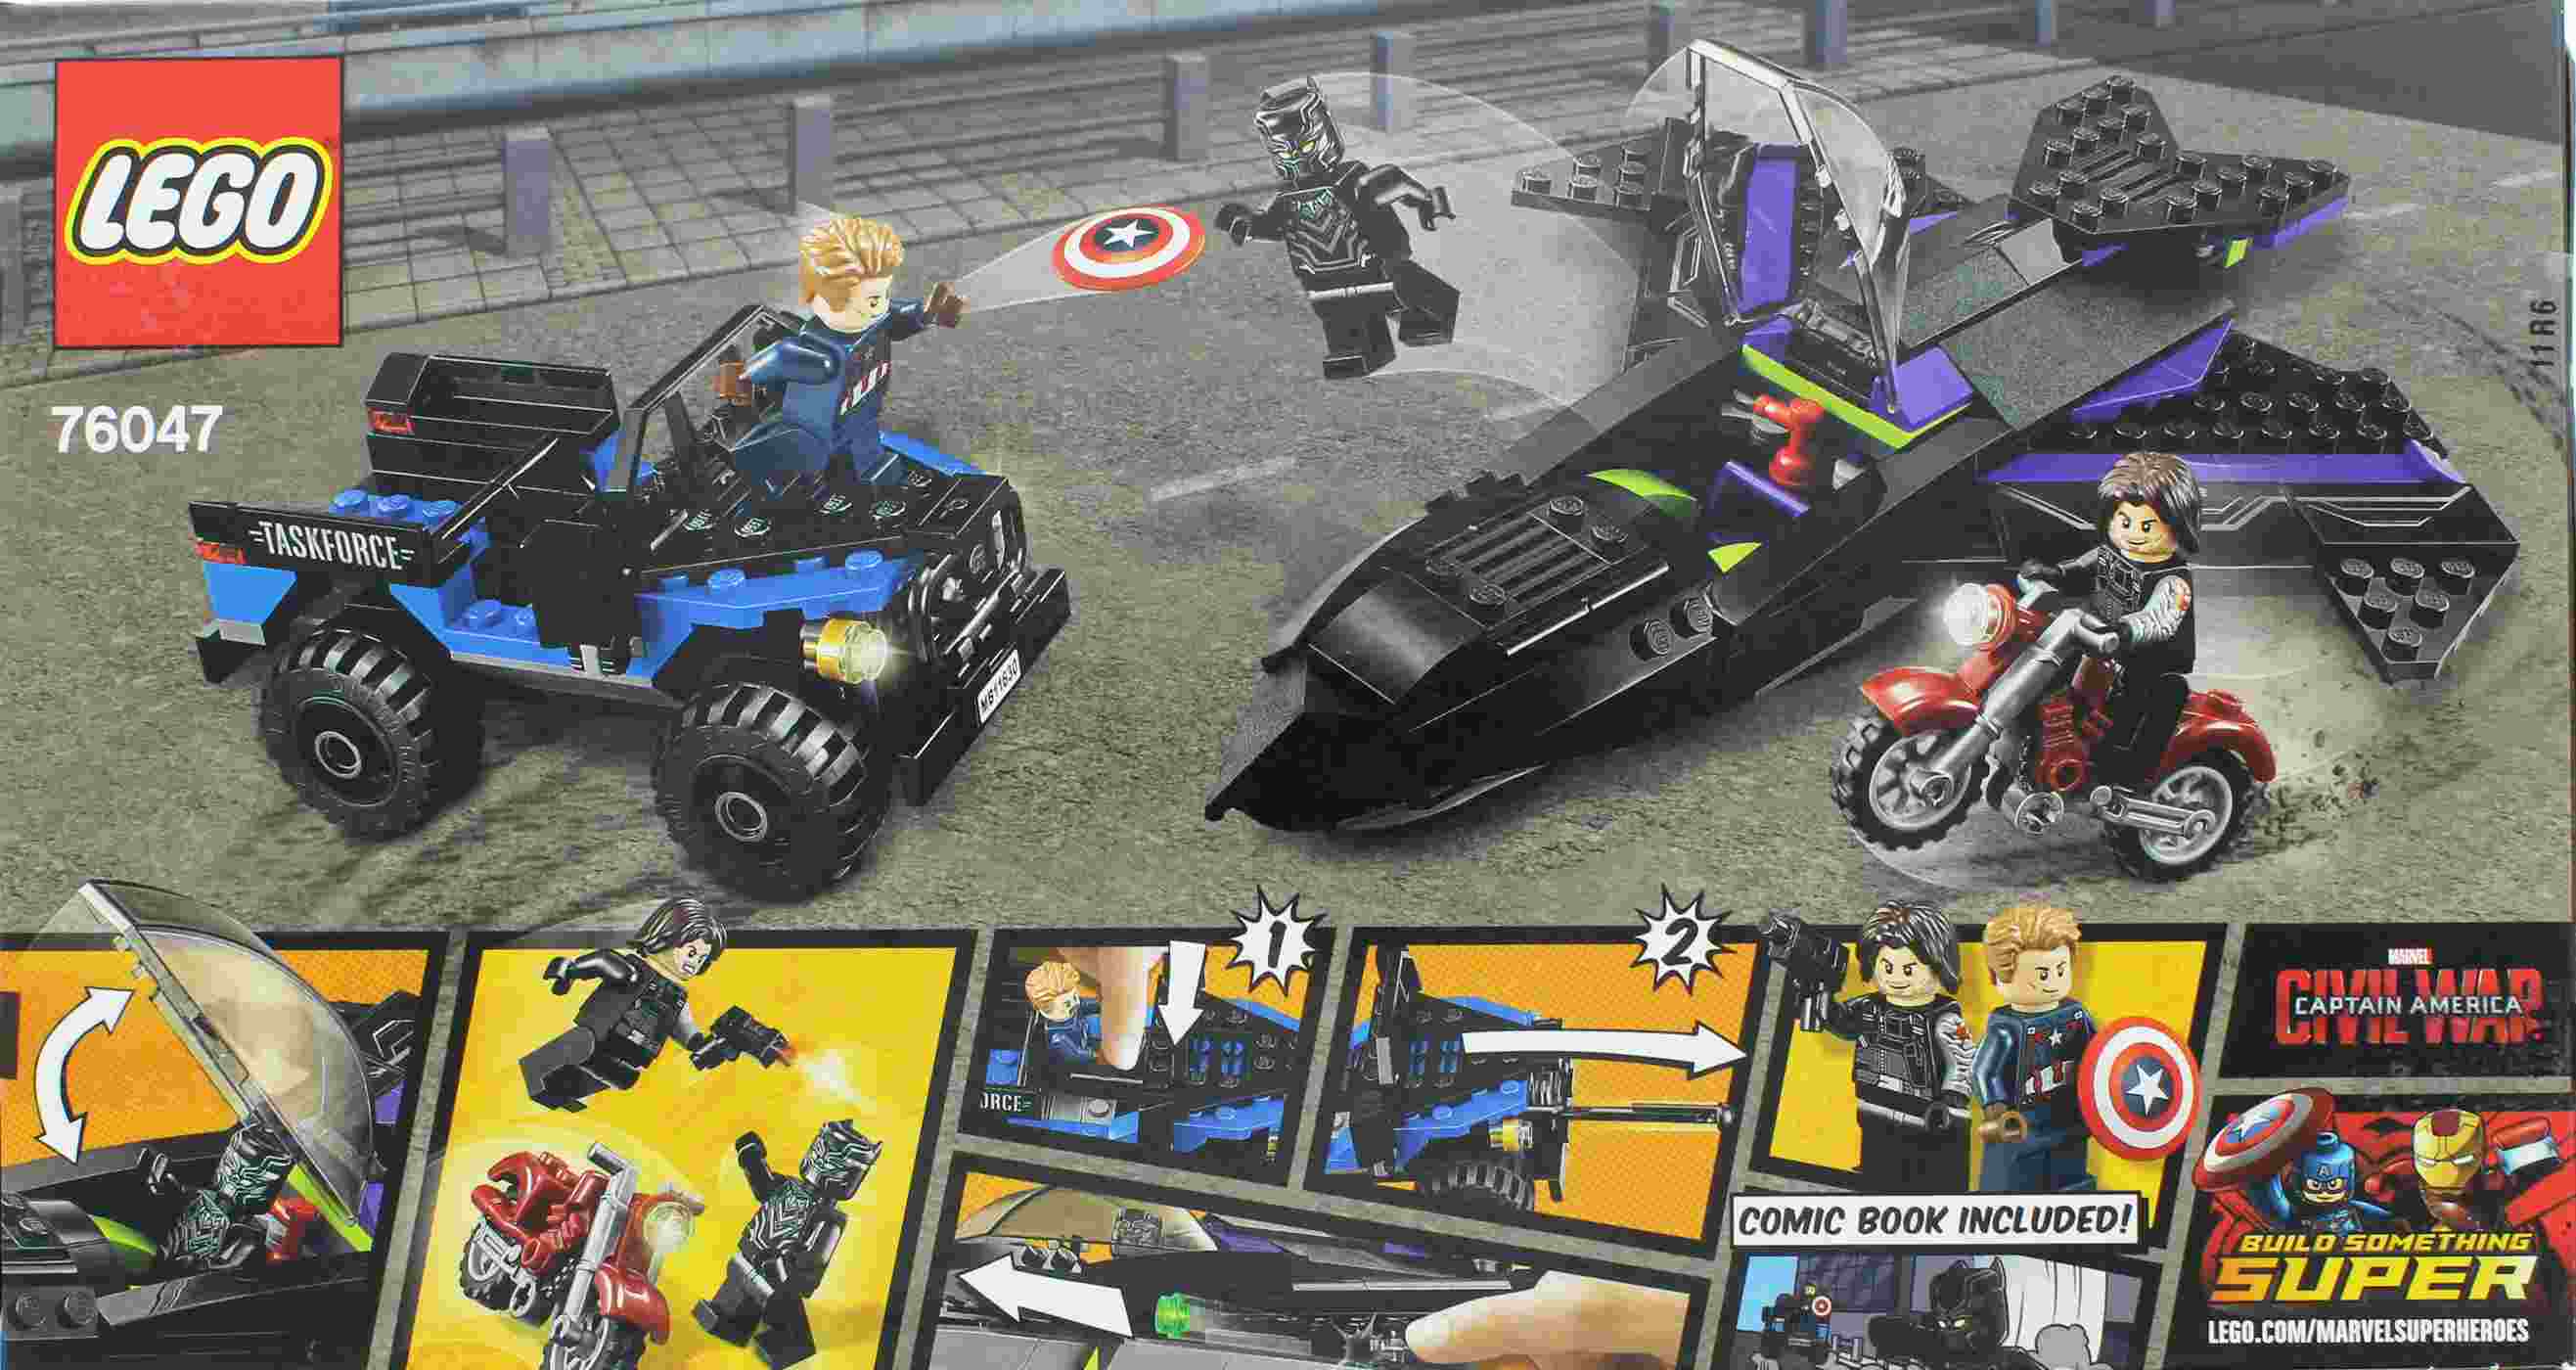 LEGO Marvel Super Heroes Black Panther Pursuit 76047 Toy